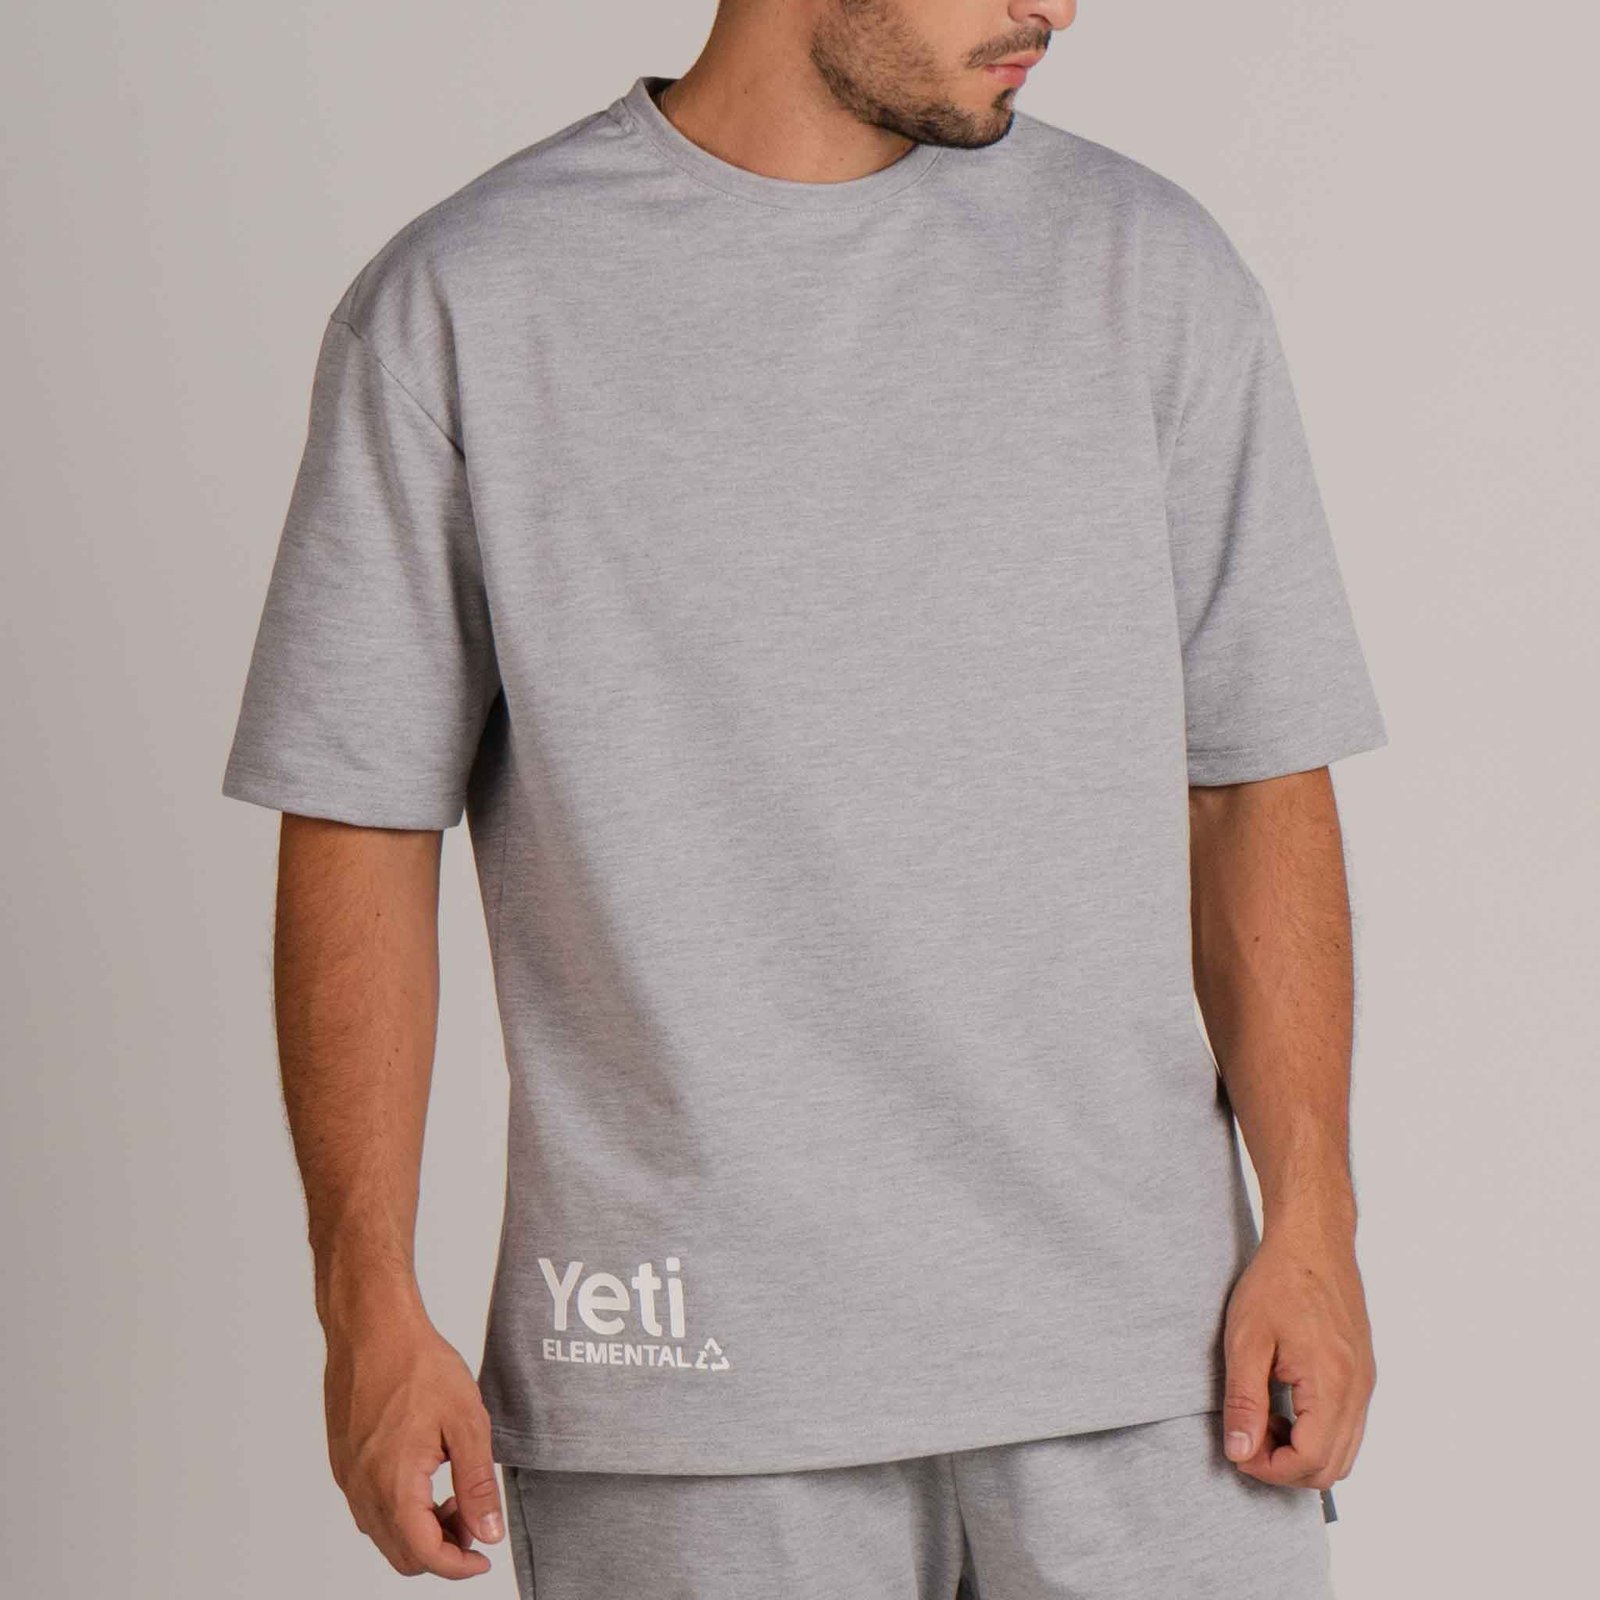 Conjunto - Conjunto Elemental: camiseta oversize + jogger sudadera (hombre)  - Yeti